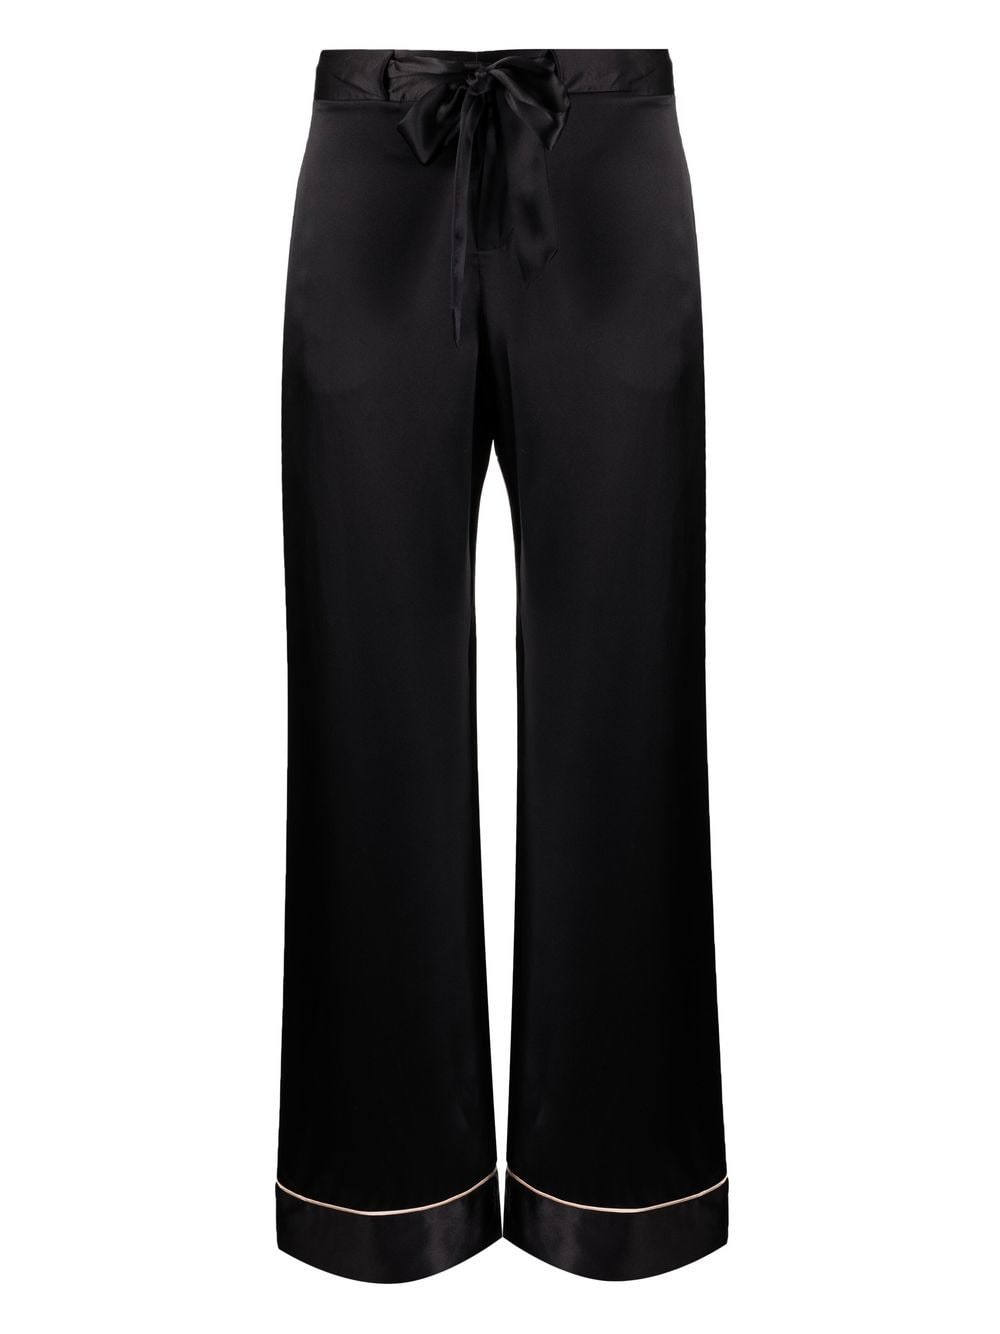 Kiki de Montparnasse Kiki silk tie-up trousers - Black von Kiki de Montparnasse